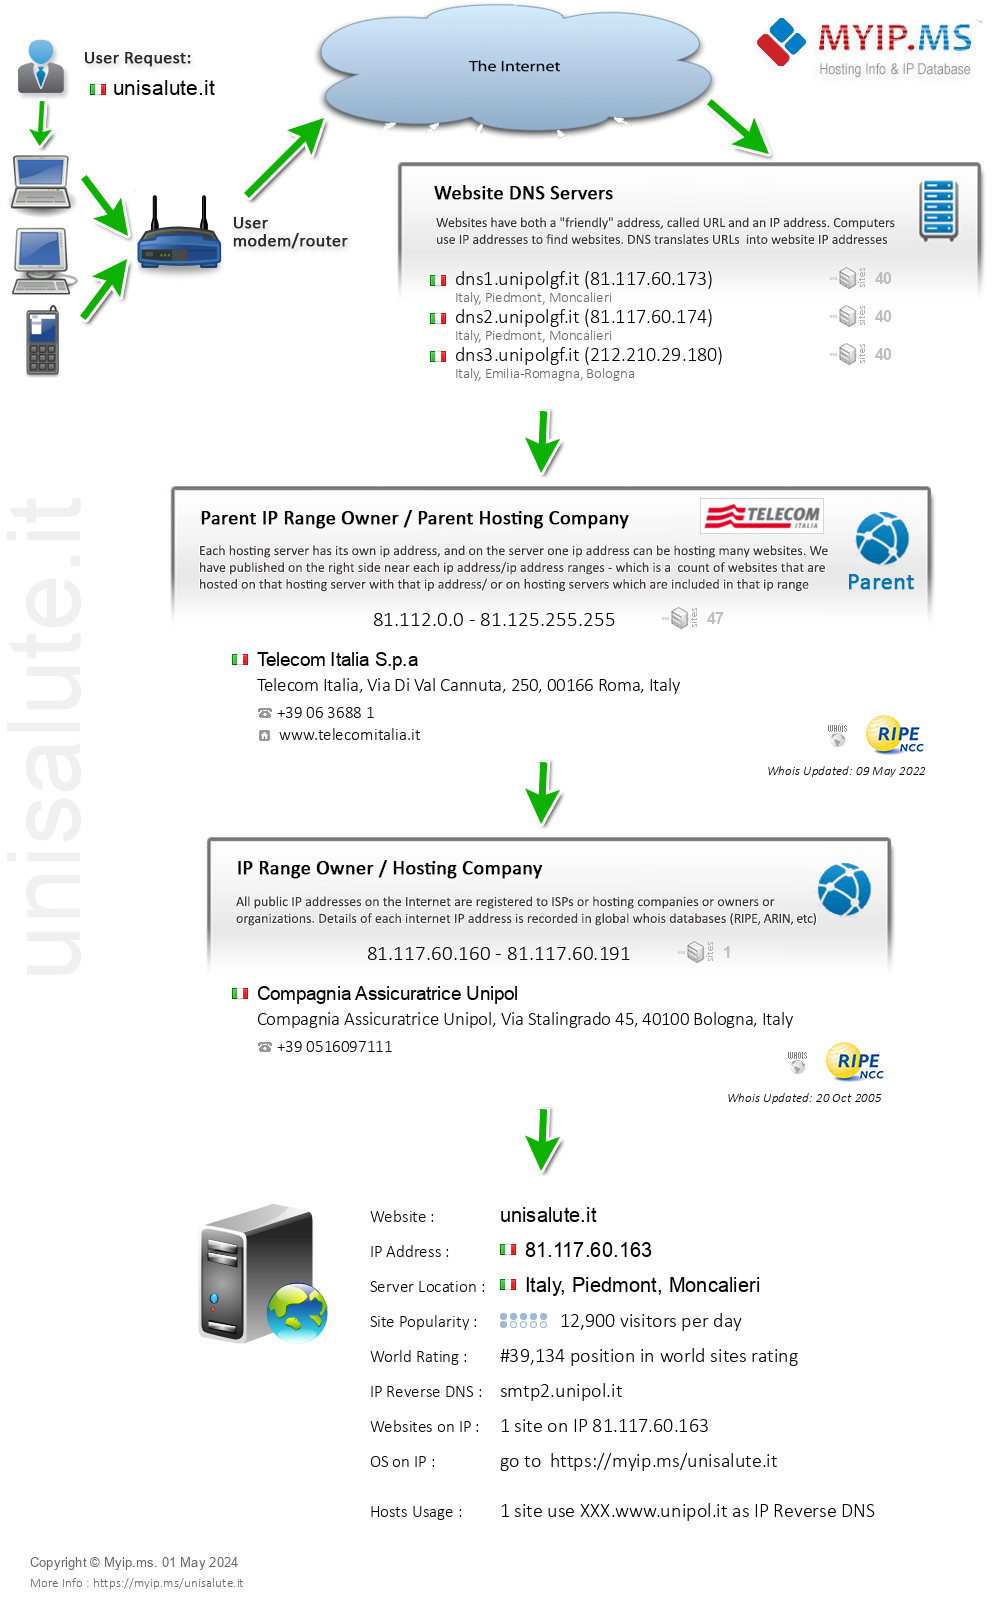 Unisalute.it - Website Hosting Visual IP Diagram